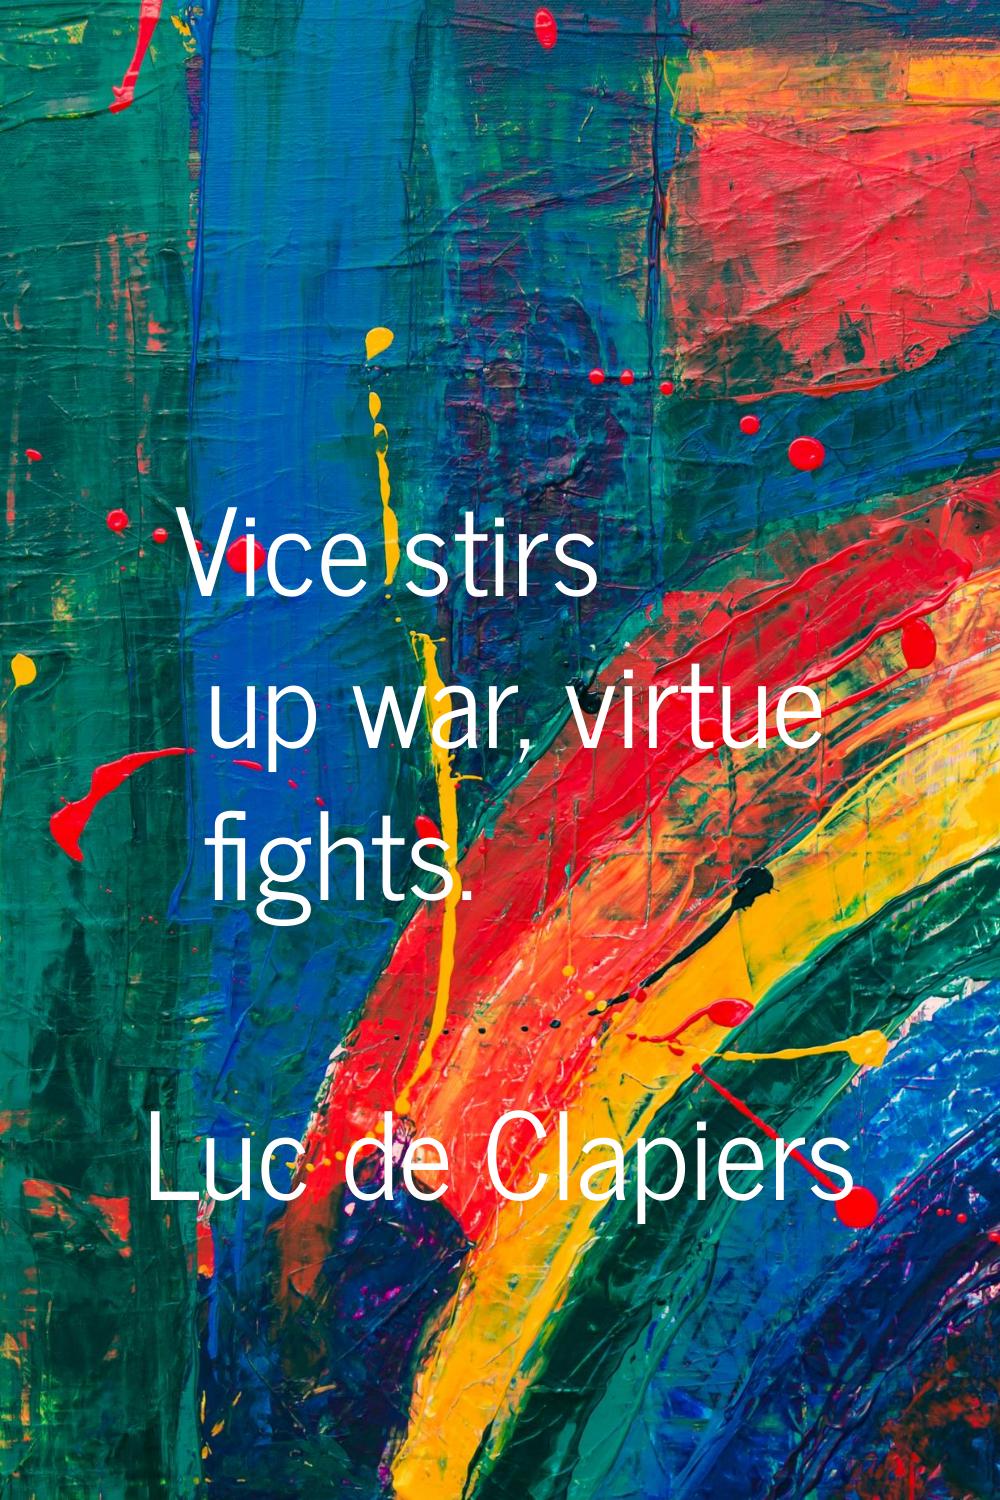 Vice stirs up war, virtue fights.